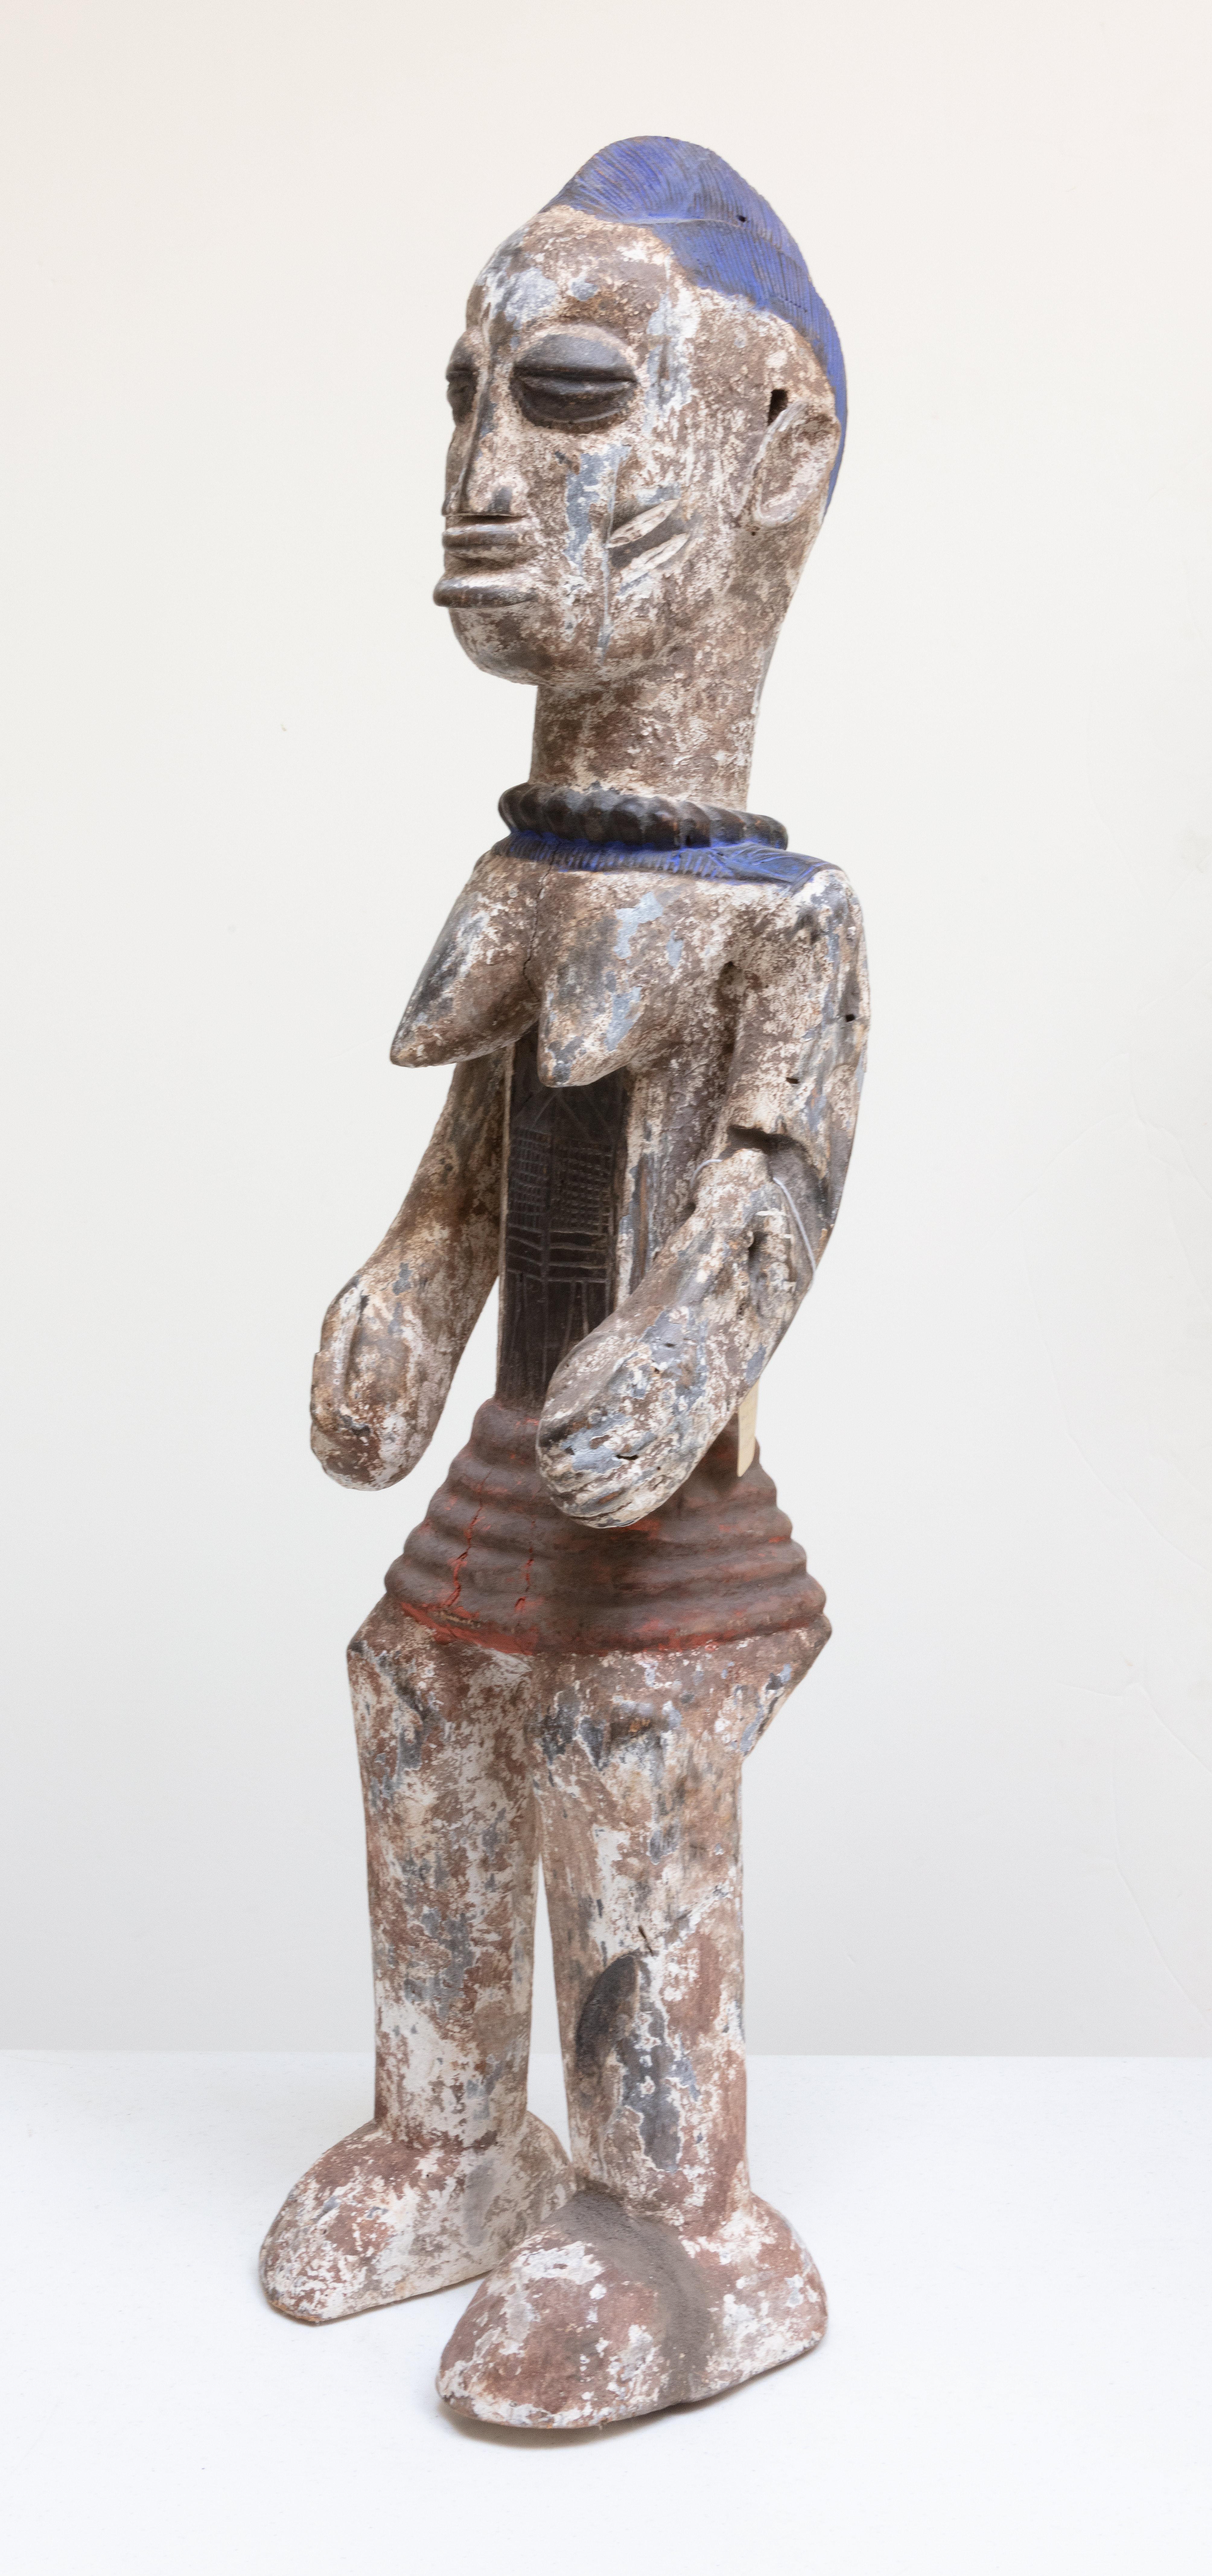 Figurative Sculpture Unknown - "Idgo Nigeria Female Standing " Statue en Wood avec pigment bleu et blanc circa 1930